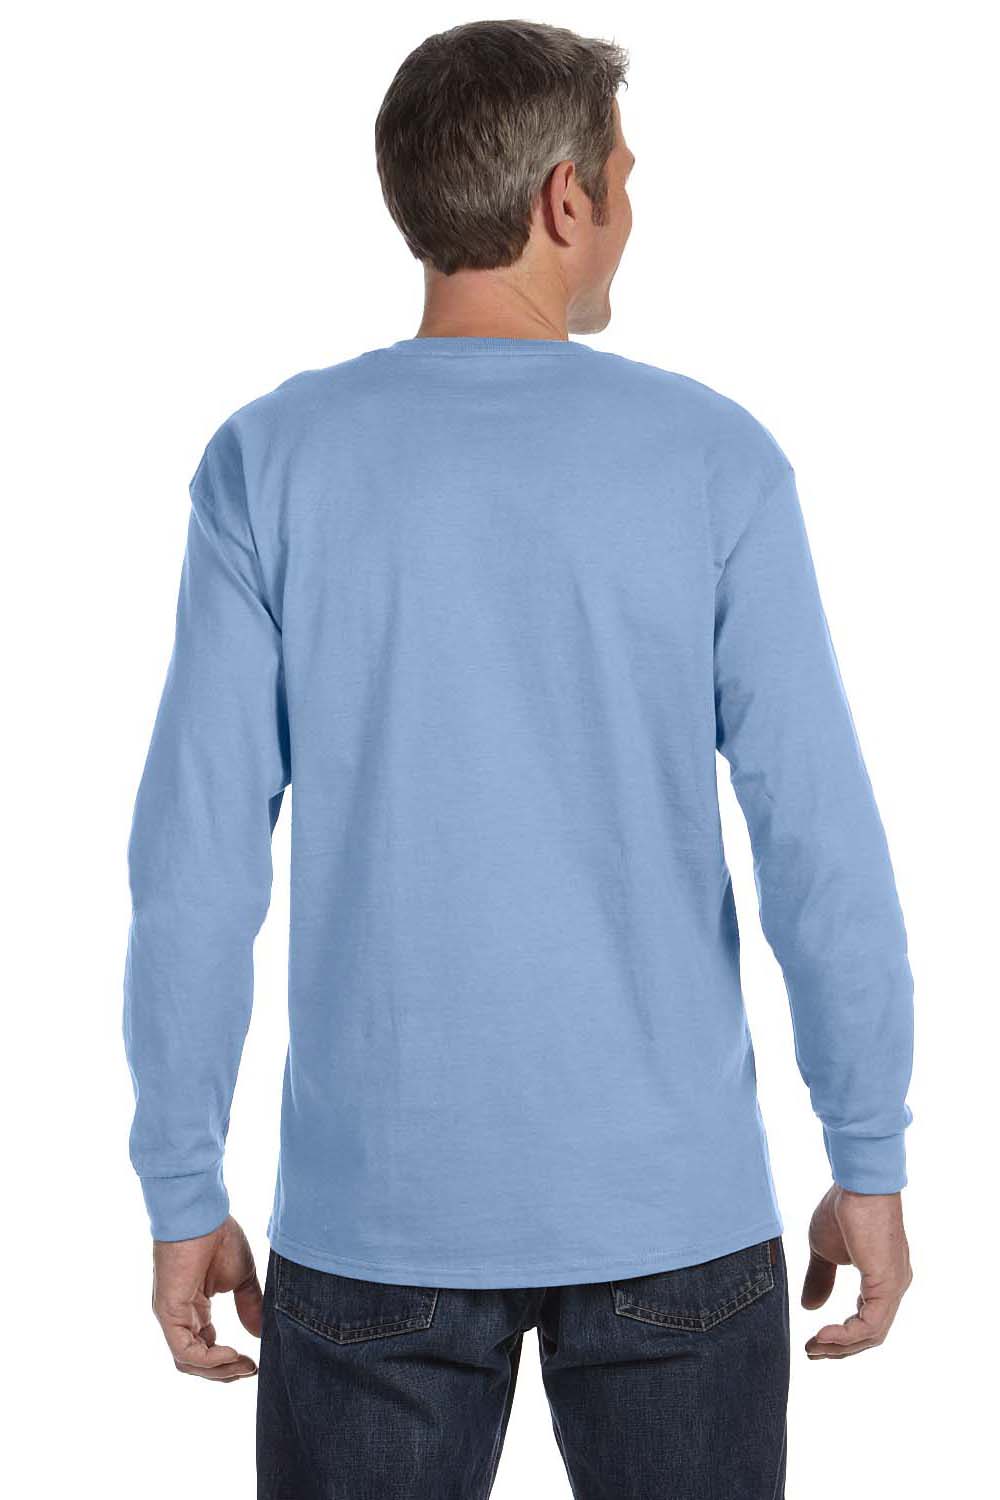 Jerzees 29L Mens Dri-Power Moisture Wicking Long Sleeve Crewneck T-Shirt Light Blue Back